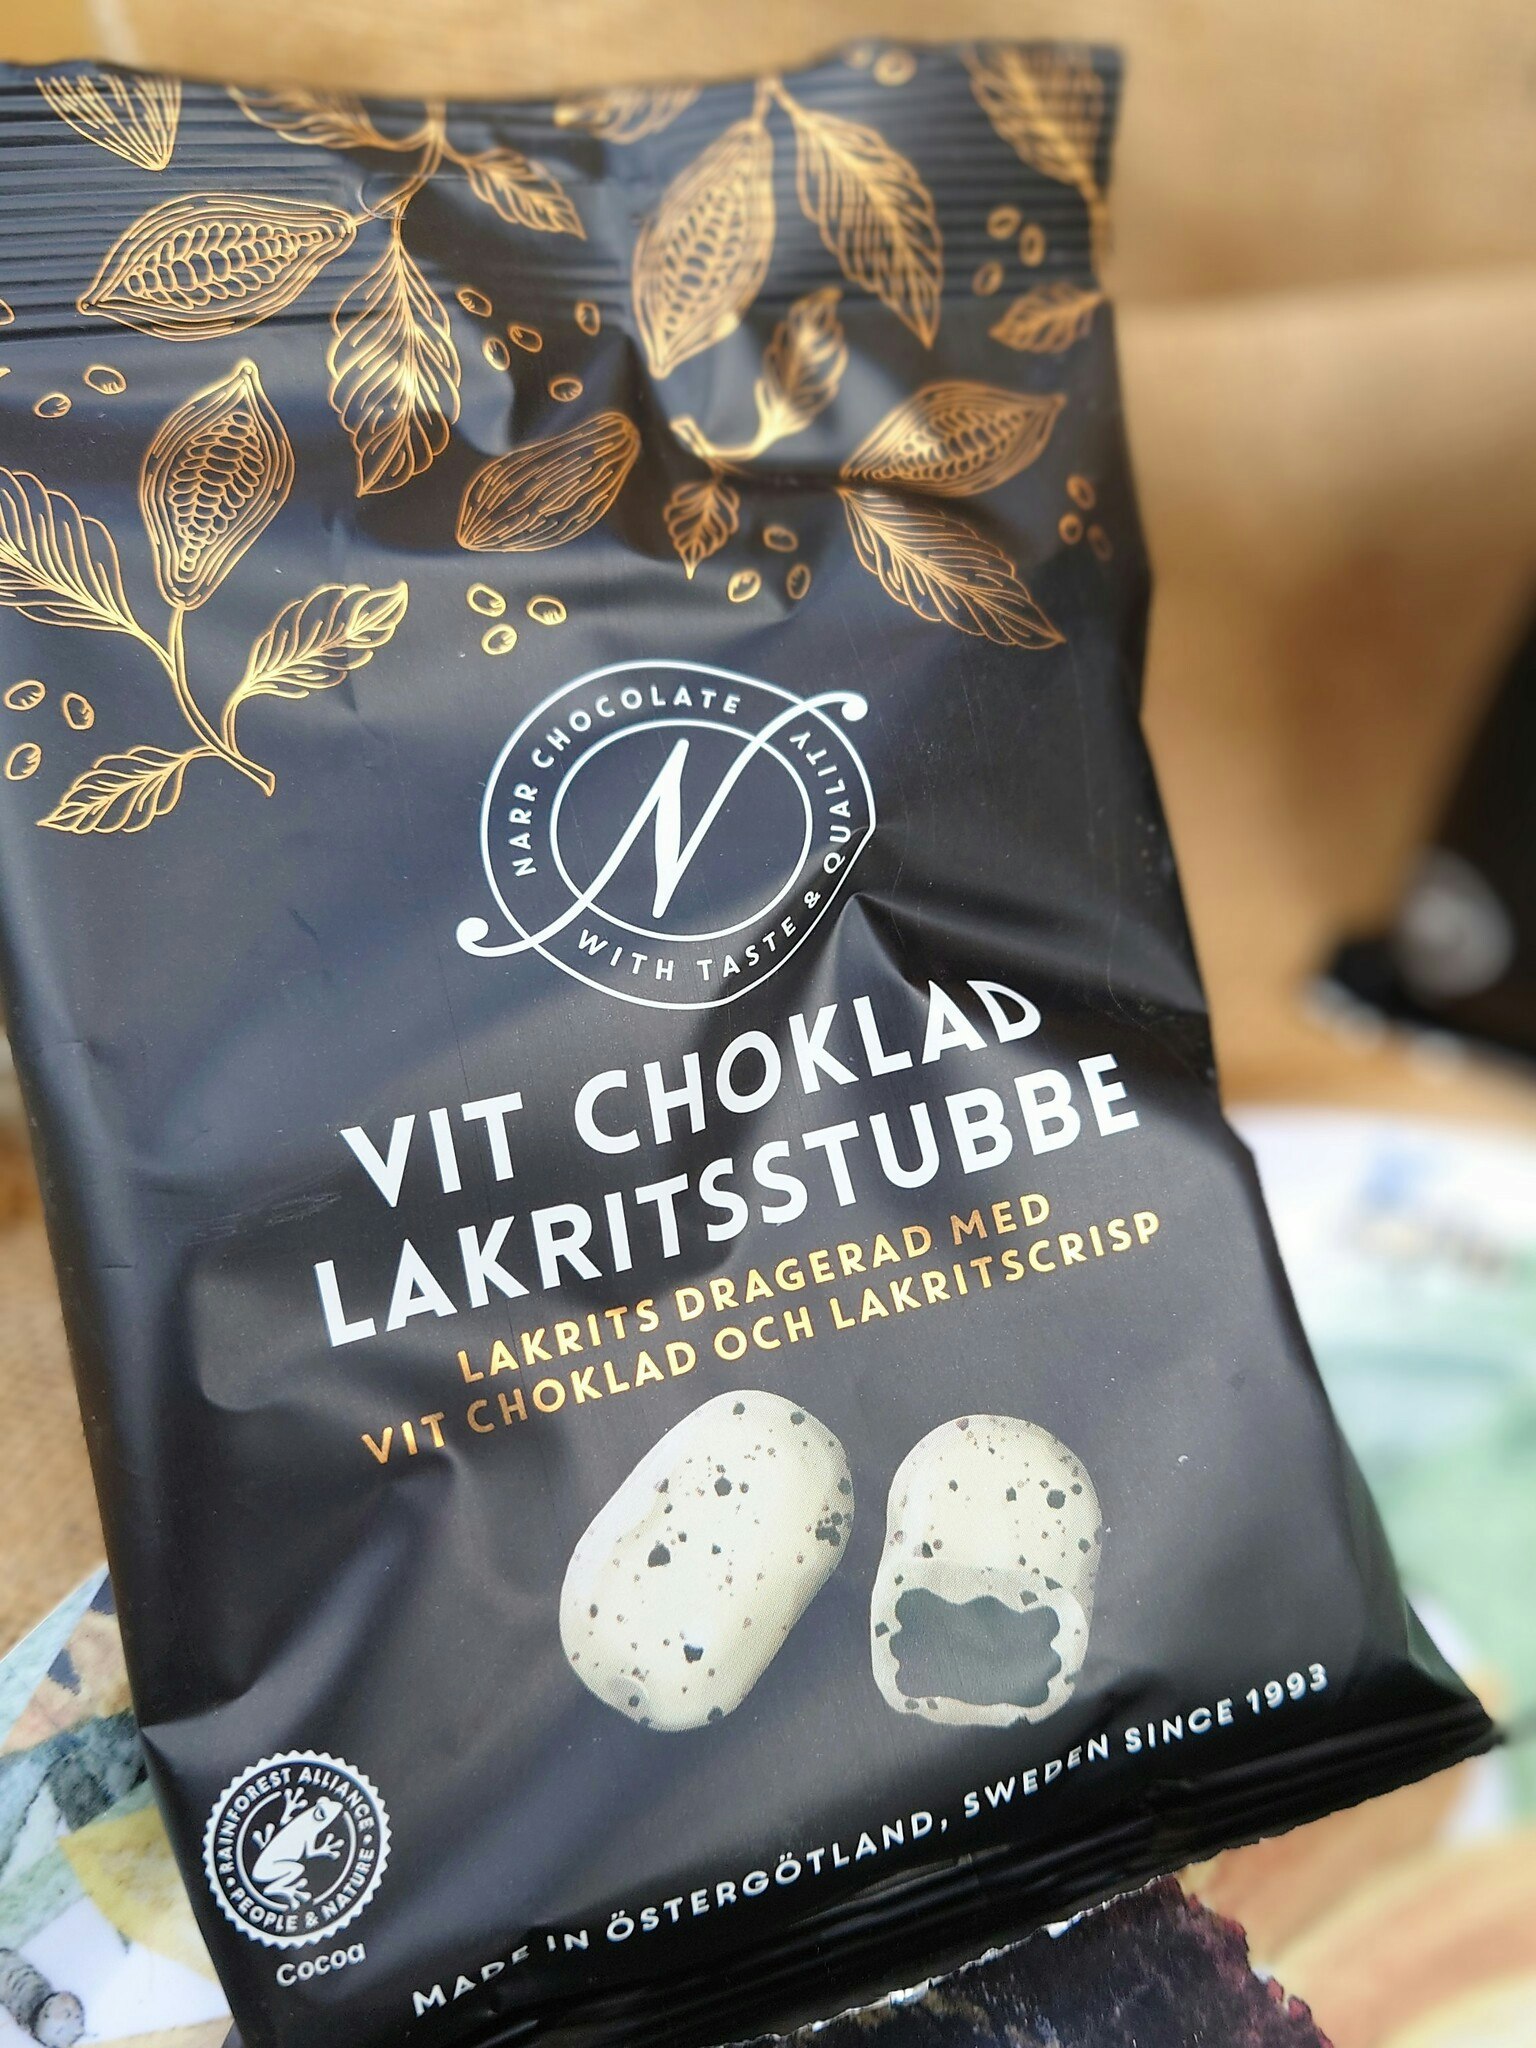 Lakrits-stubbe, vit choklad